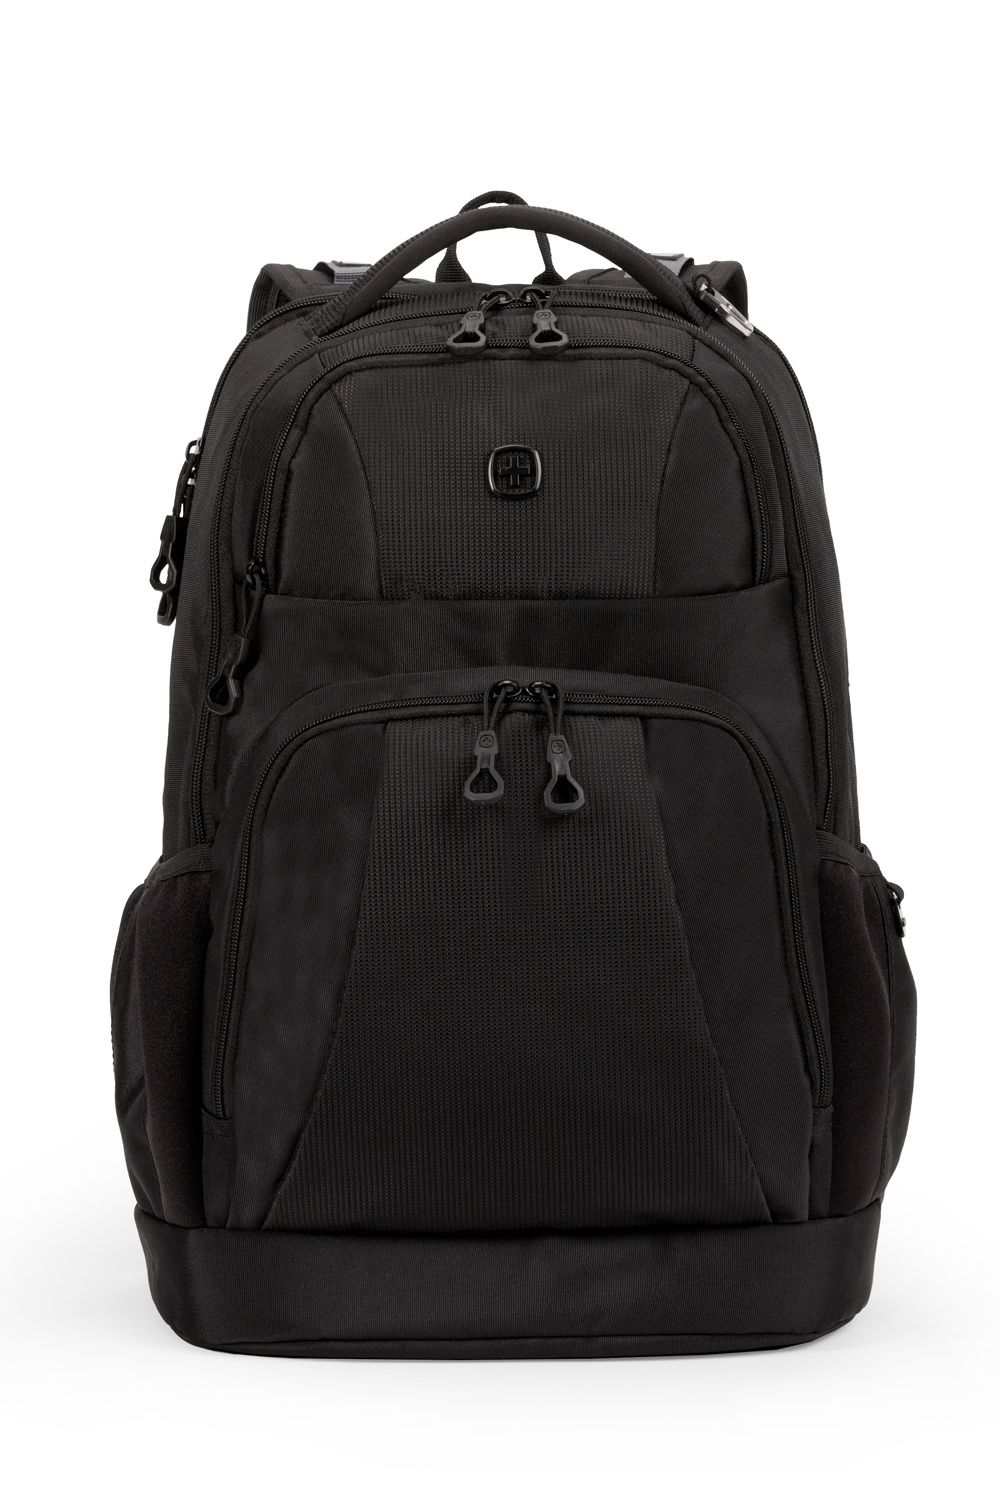 SWISSGEAR Large Padded 15-inch Laptop Backpack | Work, School, Commute |  Men's and Women's - Black : Amazon.in: Fashion